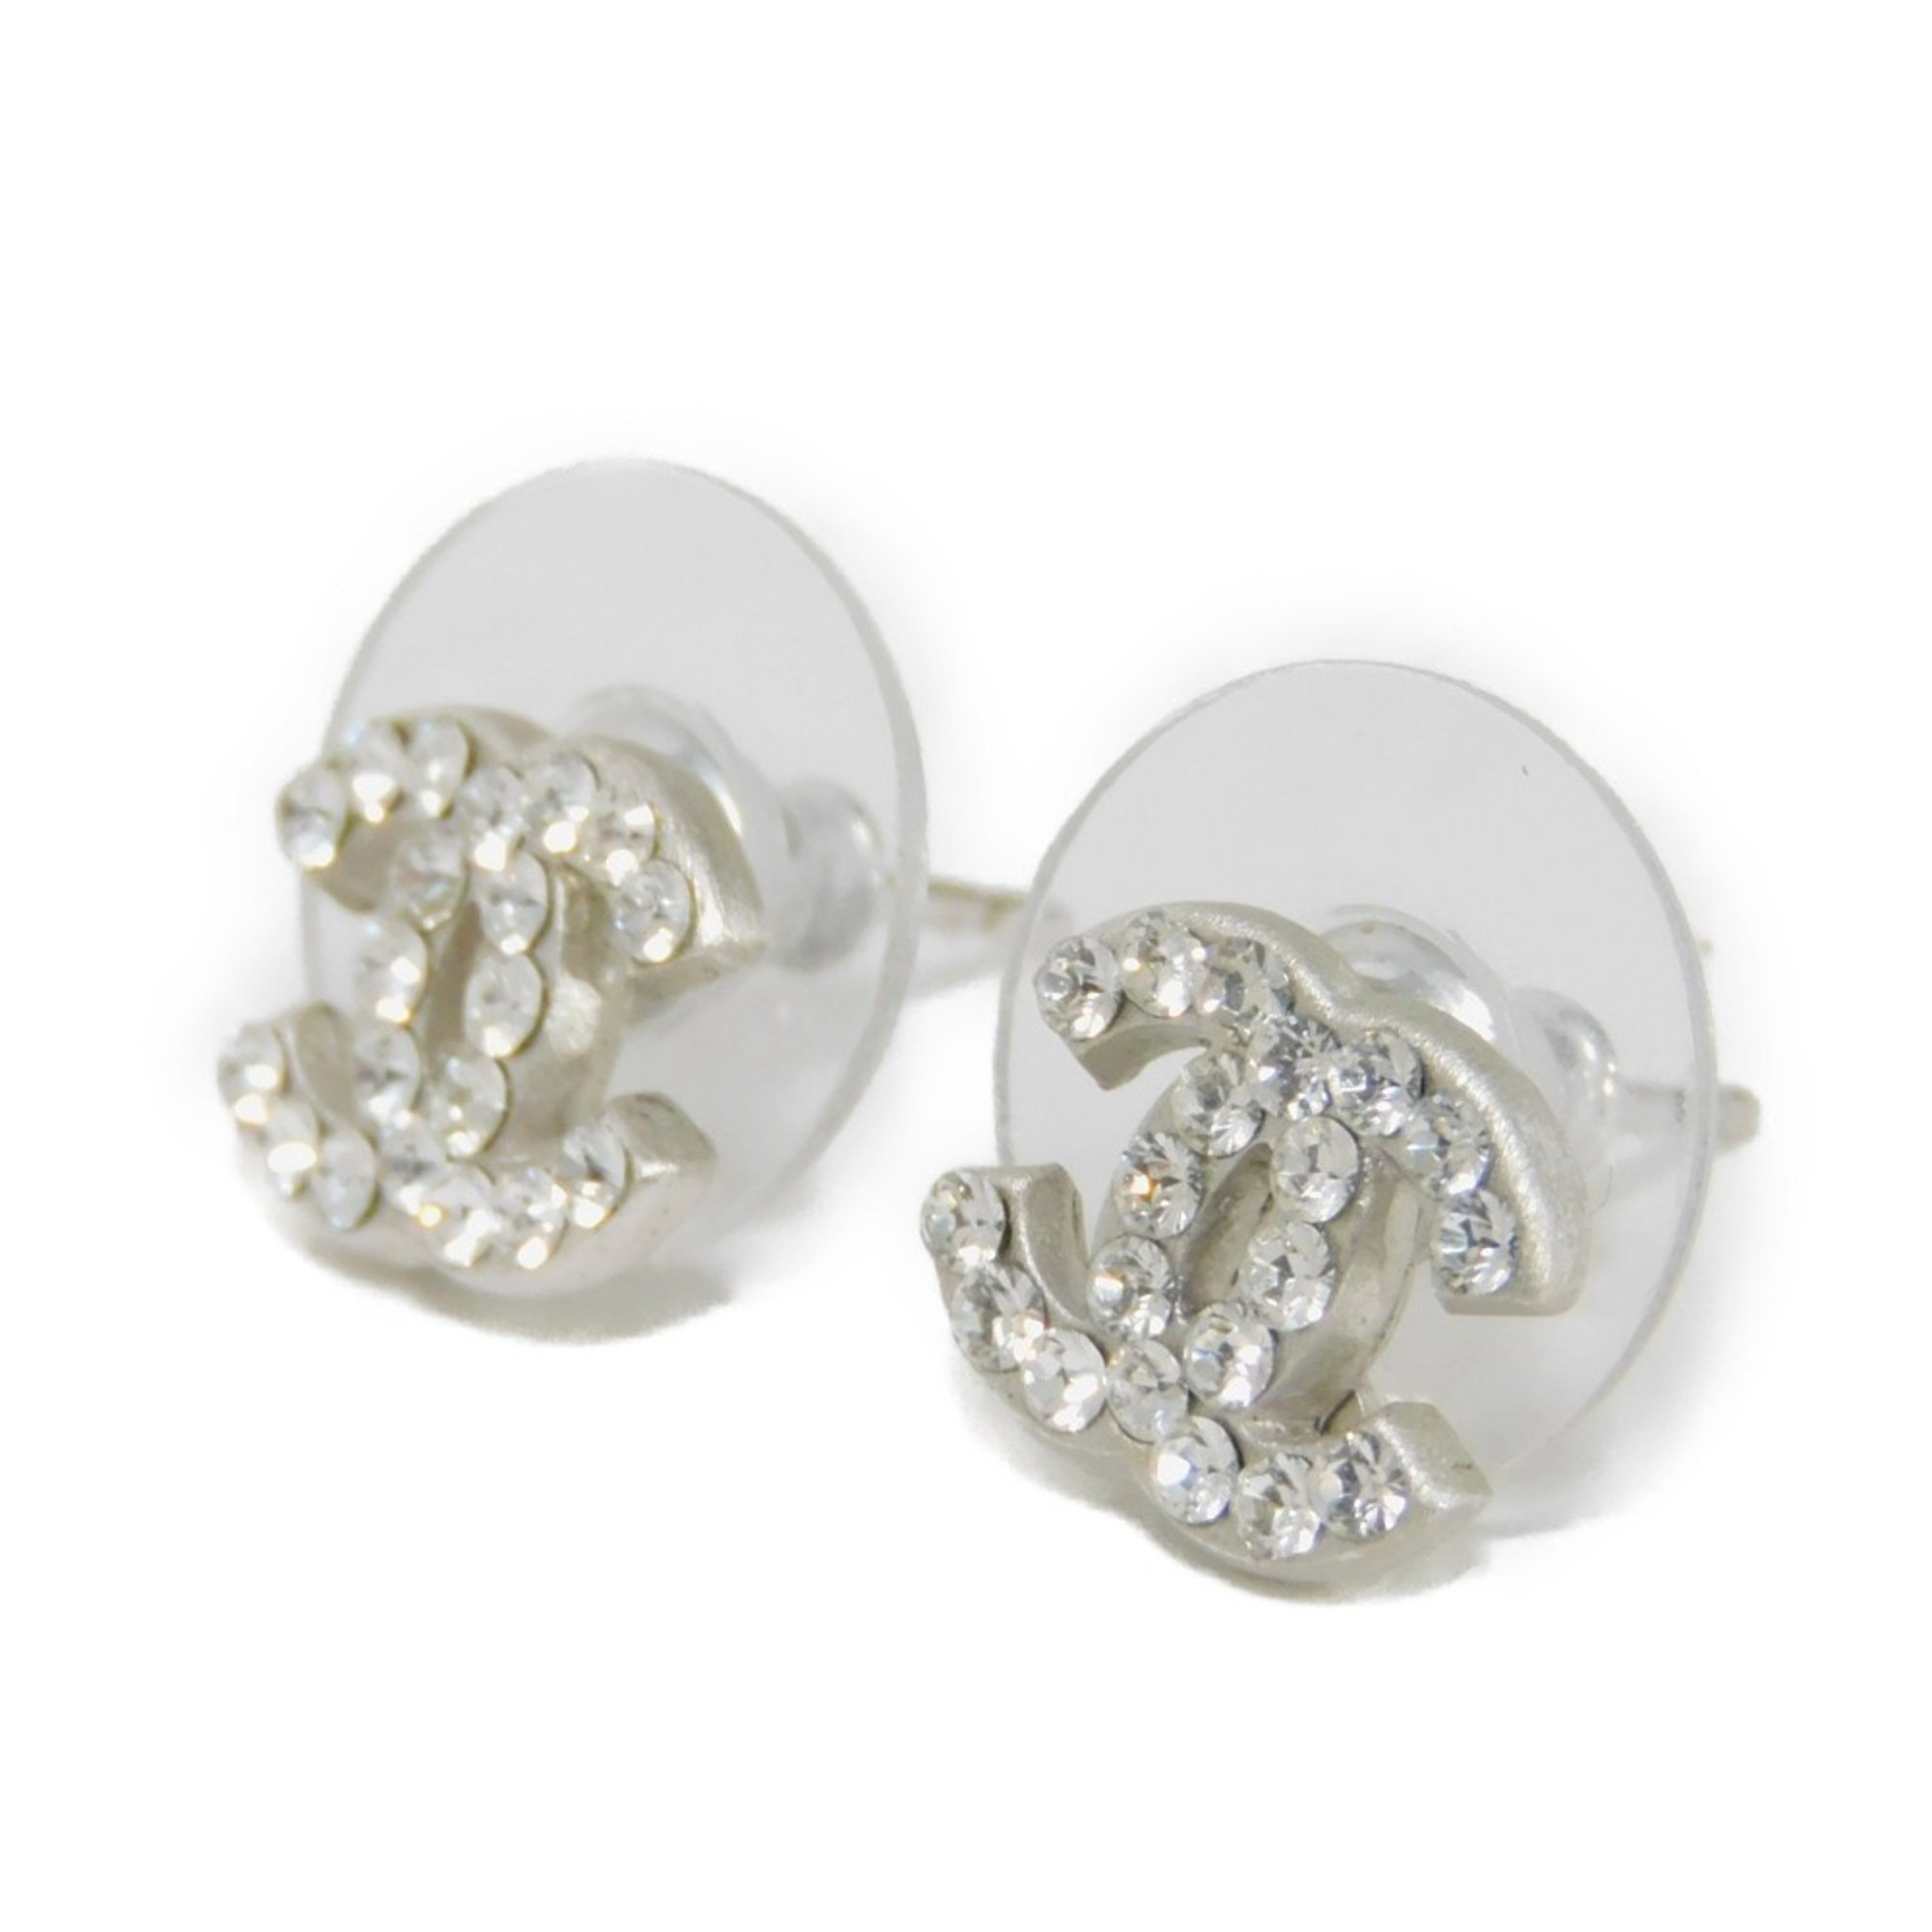 CHANEL Earrings Crystal Coco Mark Silver Rhinestone Strass Stud 06P CC Clear A26210 Women's